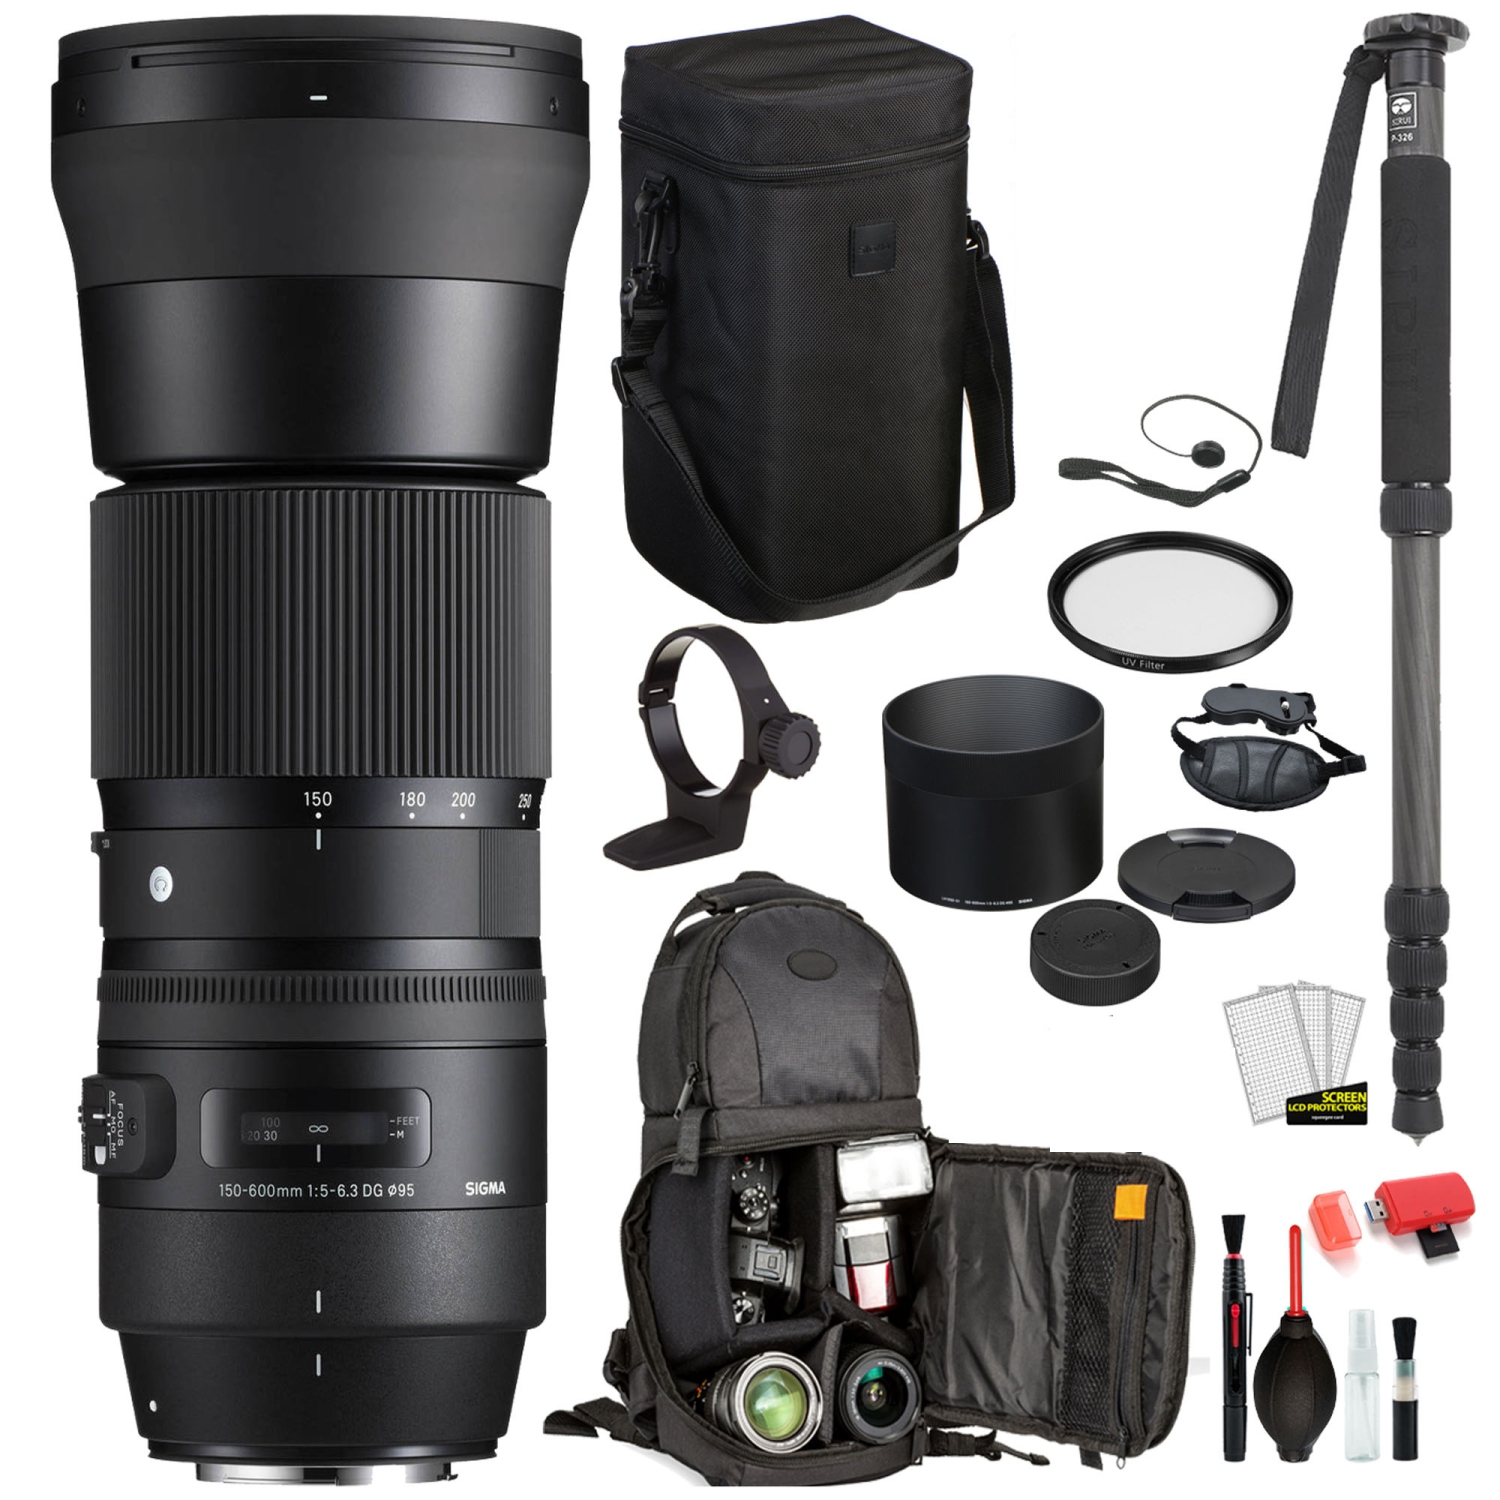 Sigma 150-600mm f/5-6.3 DG OS HSM Contemporary Lens for Nikon F Bundle Kit Includes: UV Filter | SanDisk 64GB SD Card | More - US Version w/ Seller Warranty